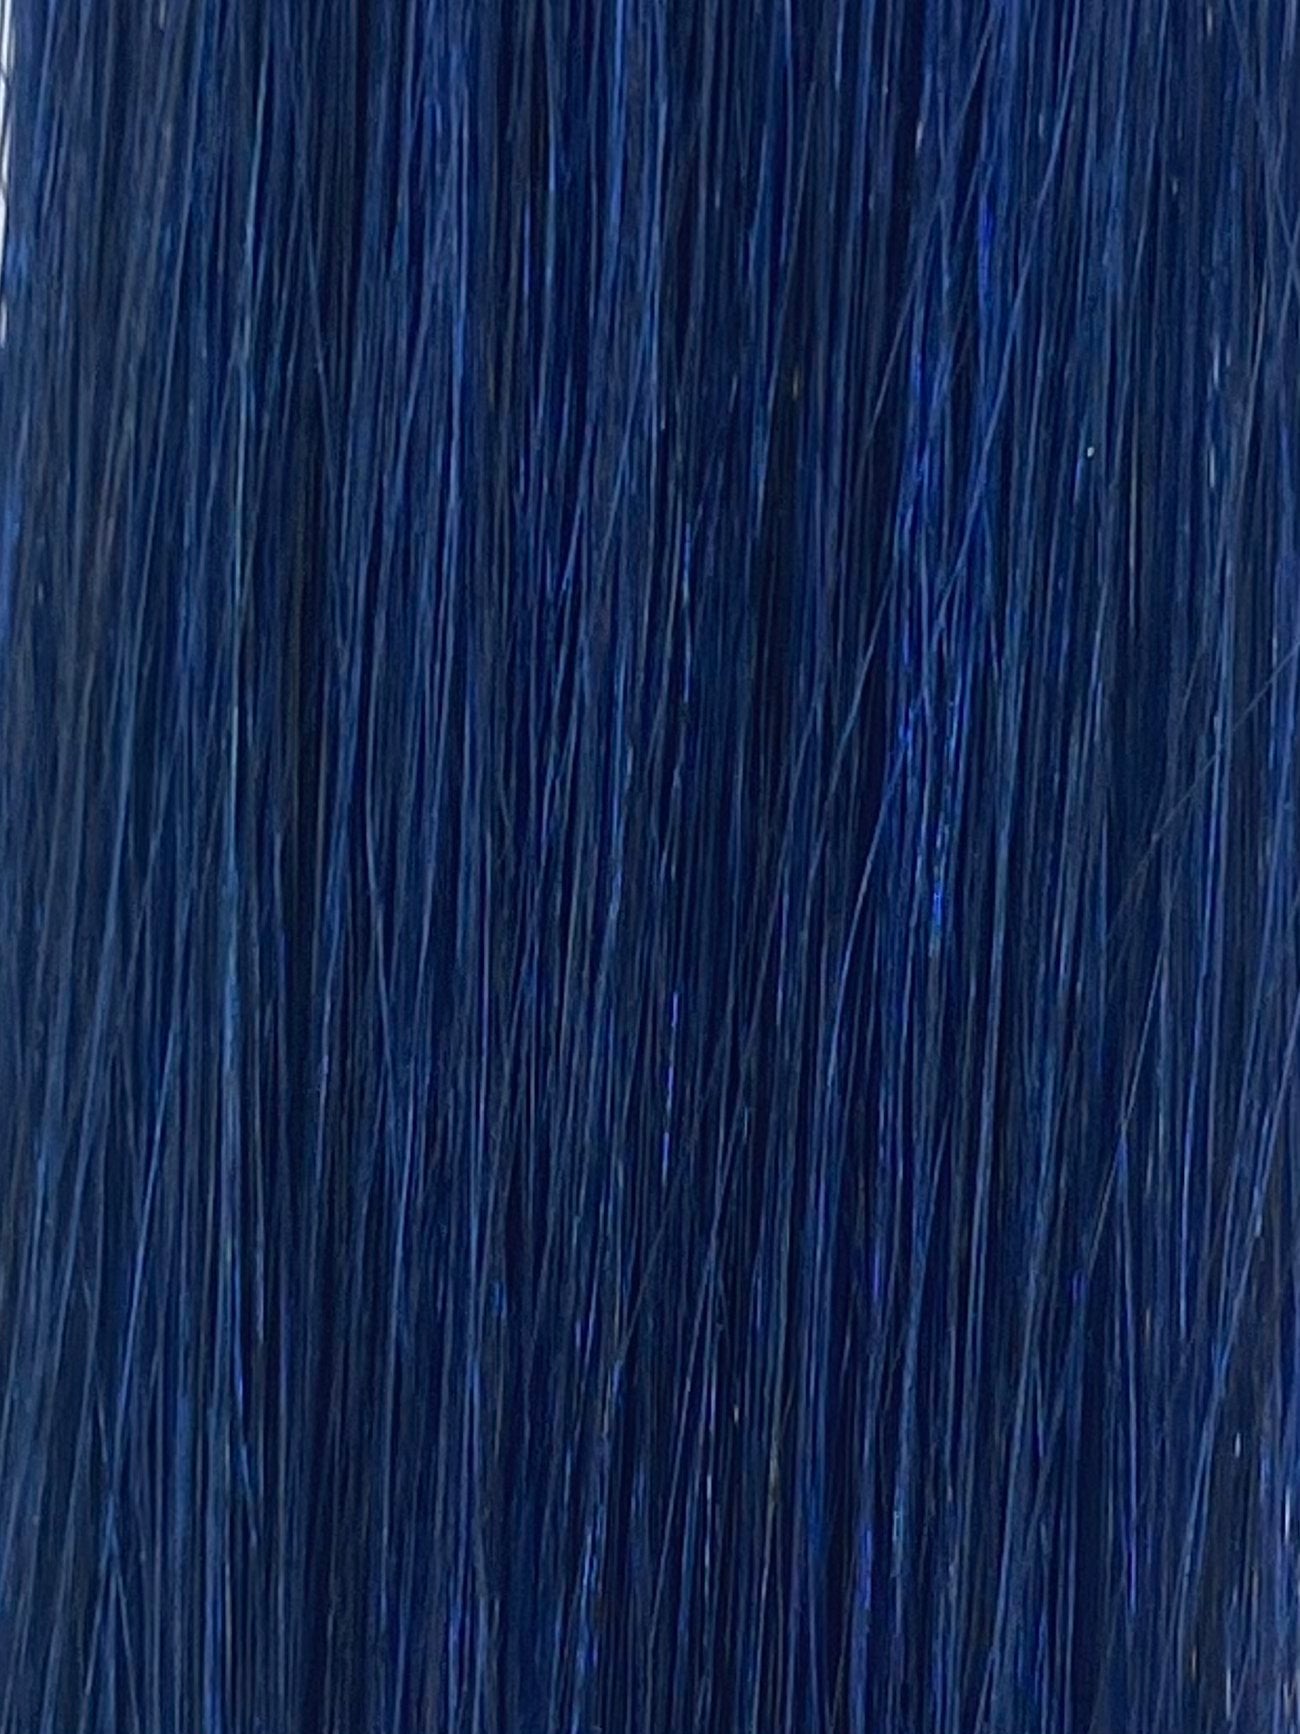 Fusion hair extensions #Blue - Fantasy - 50cm/20 inches - Blue Fusion Euro So Cap 